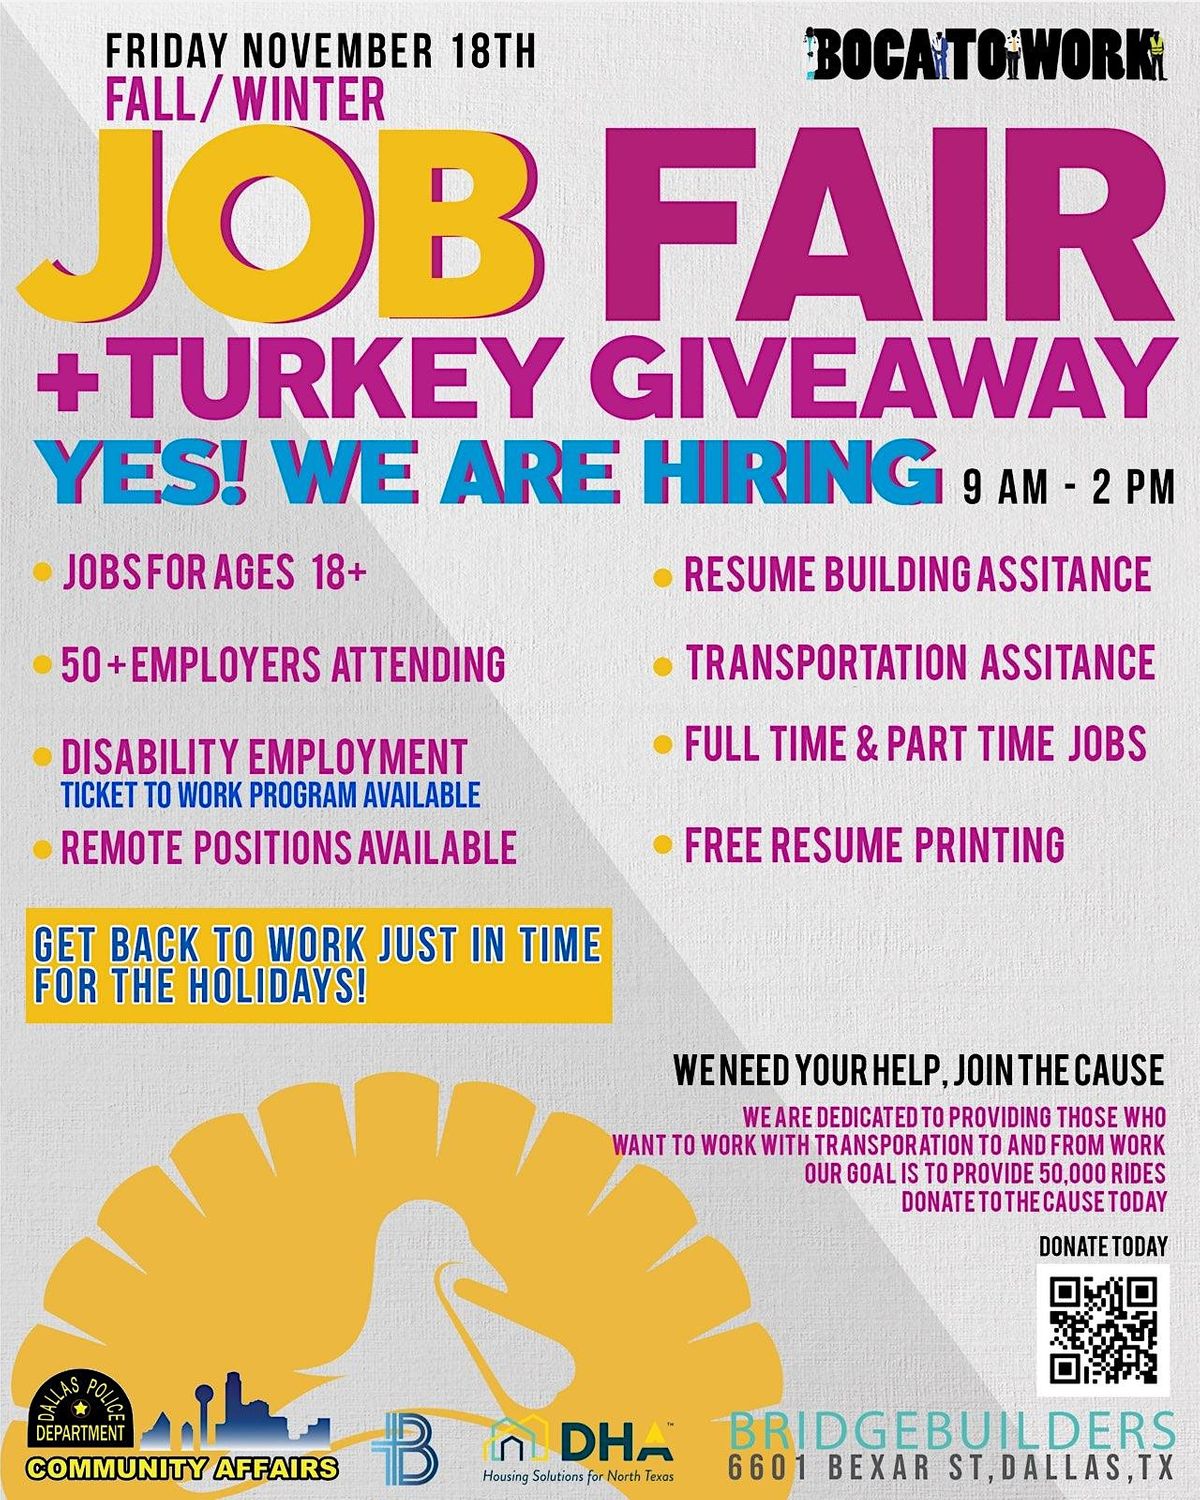 Fall Job Fair & Turkey Giveaway Bridge Builders, Dallas, TX